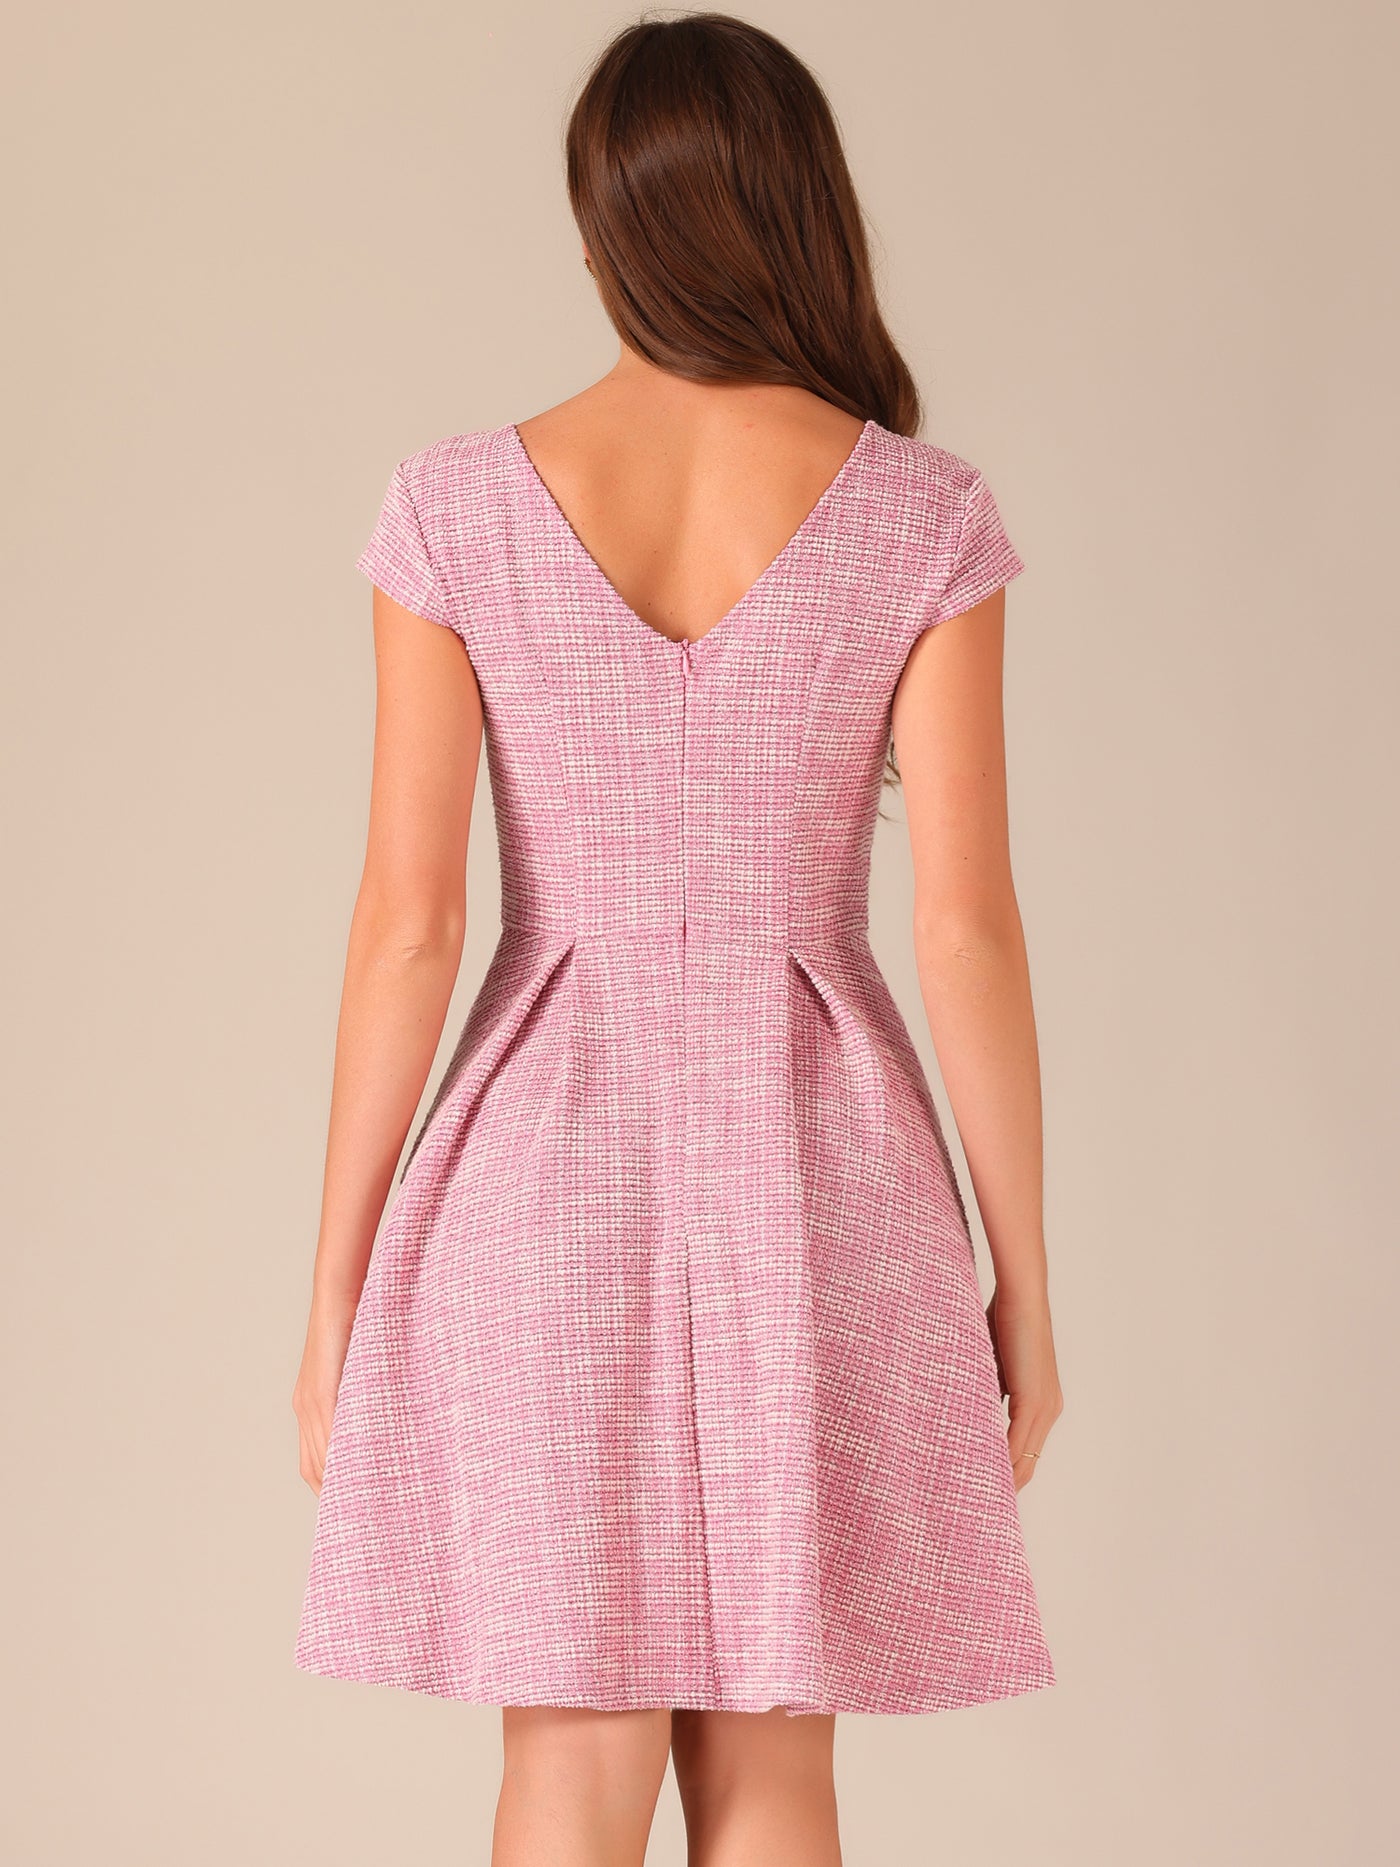 Allegra K Plaid Tweed Round Neck Cap Sleeve A-Line Vintage Pleated Dress